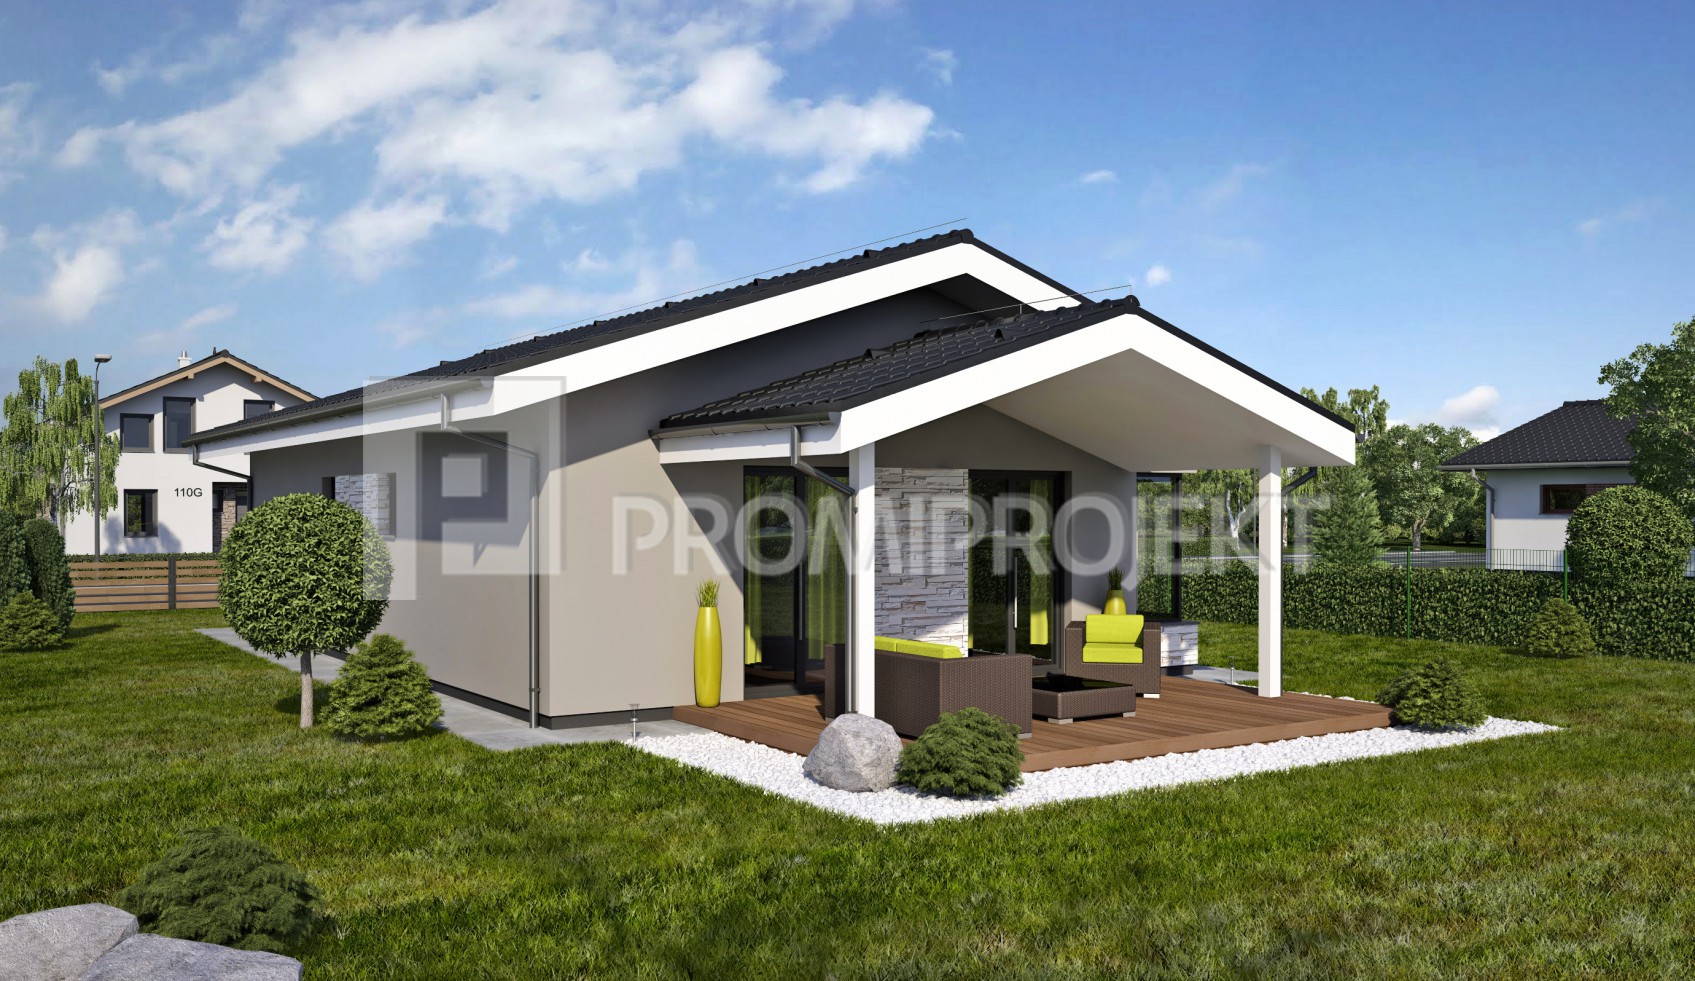 lacný bungalov Laguna 18N, PROmiprojekt 